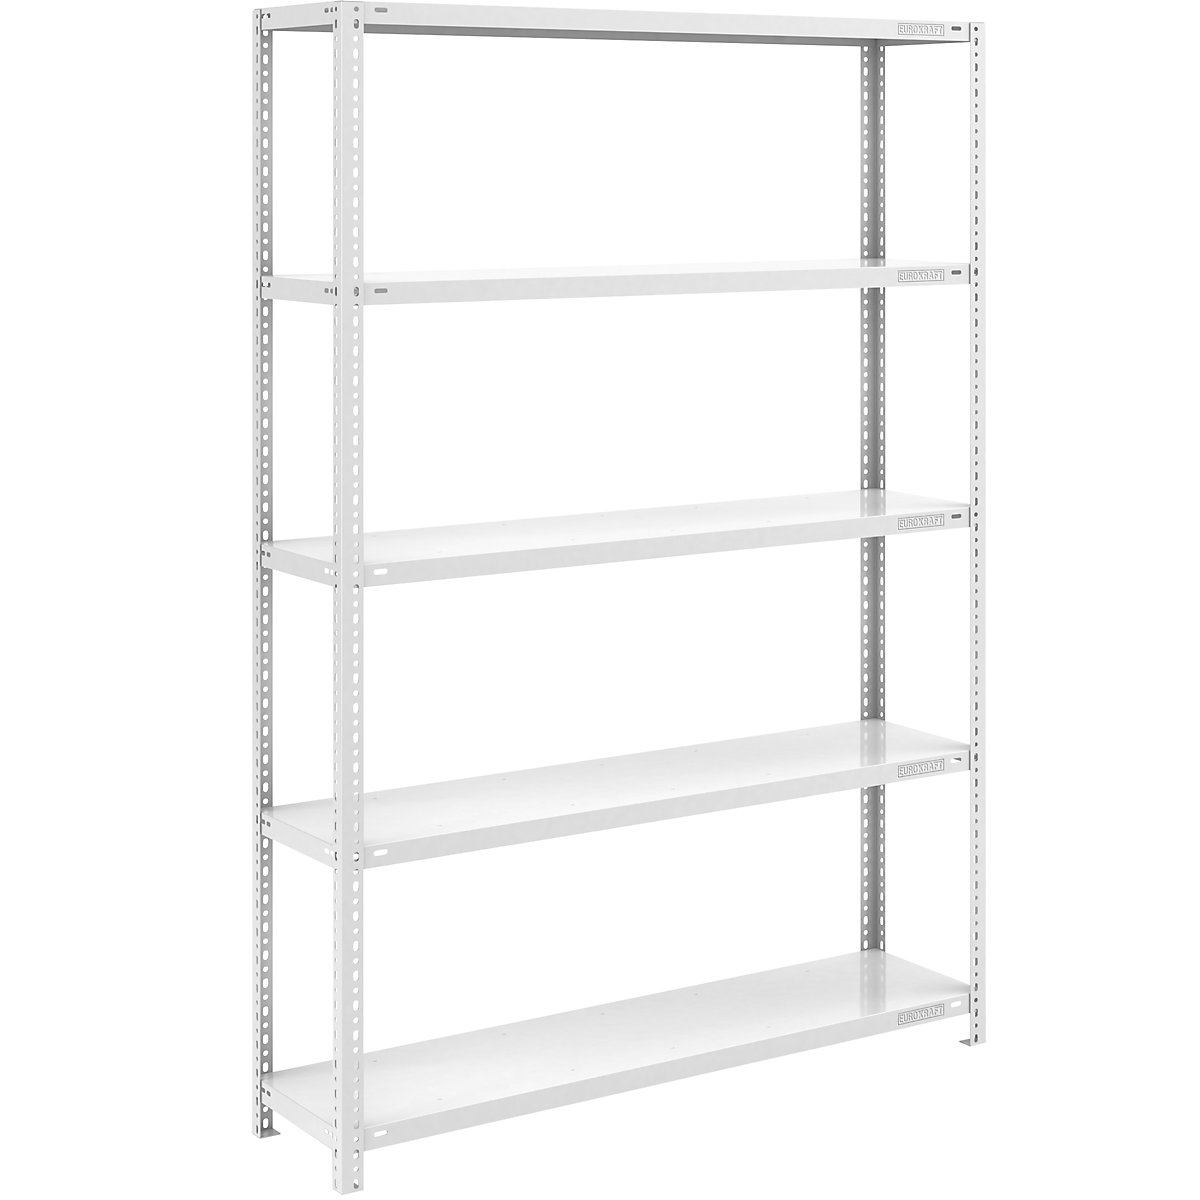 Bolt-together shelf unit, light duty, plastic coated – eurokraft pro, shelf unit height 2000 mm, shelf width 1300 mm, depth 400 mm, standard shelf unit-5